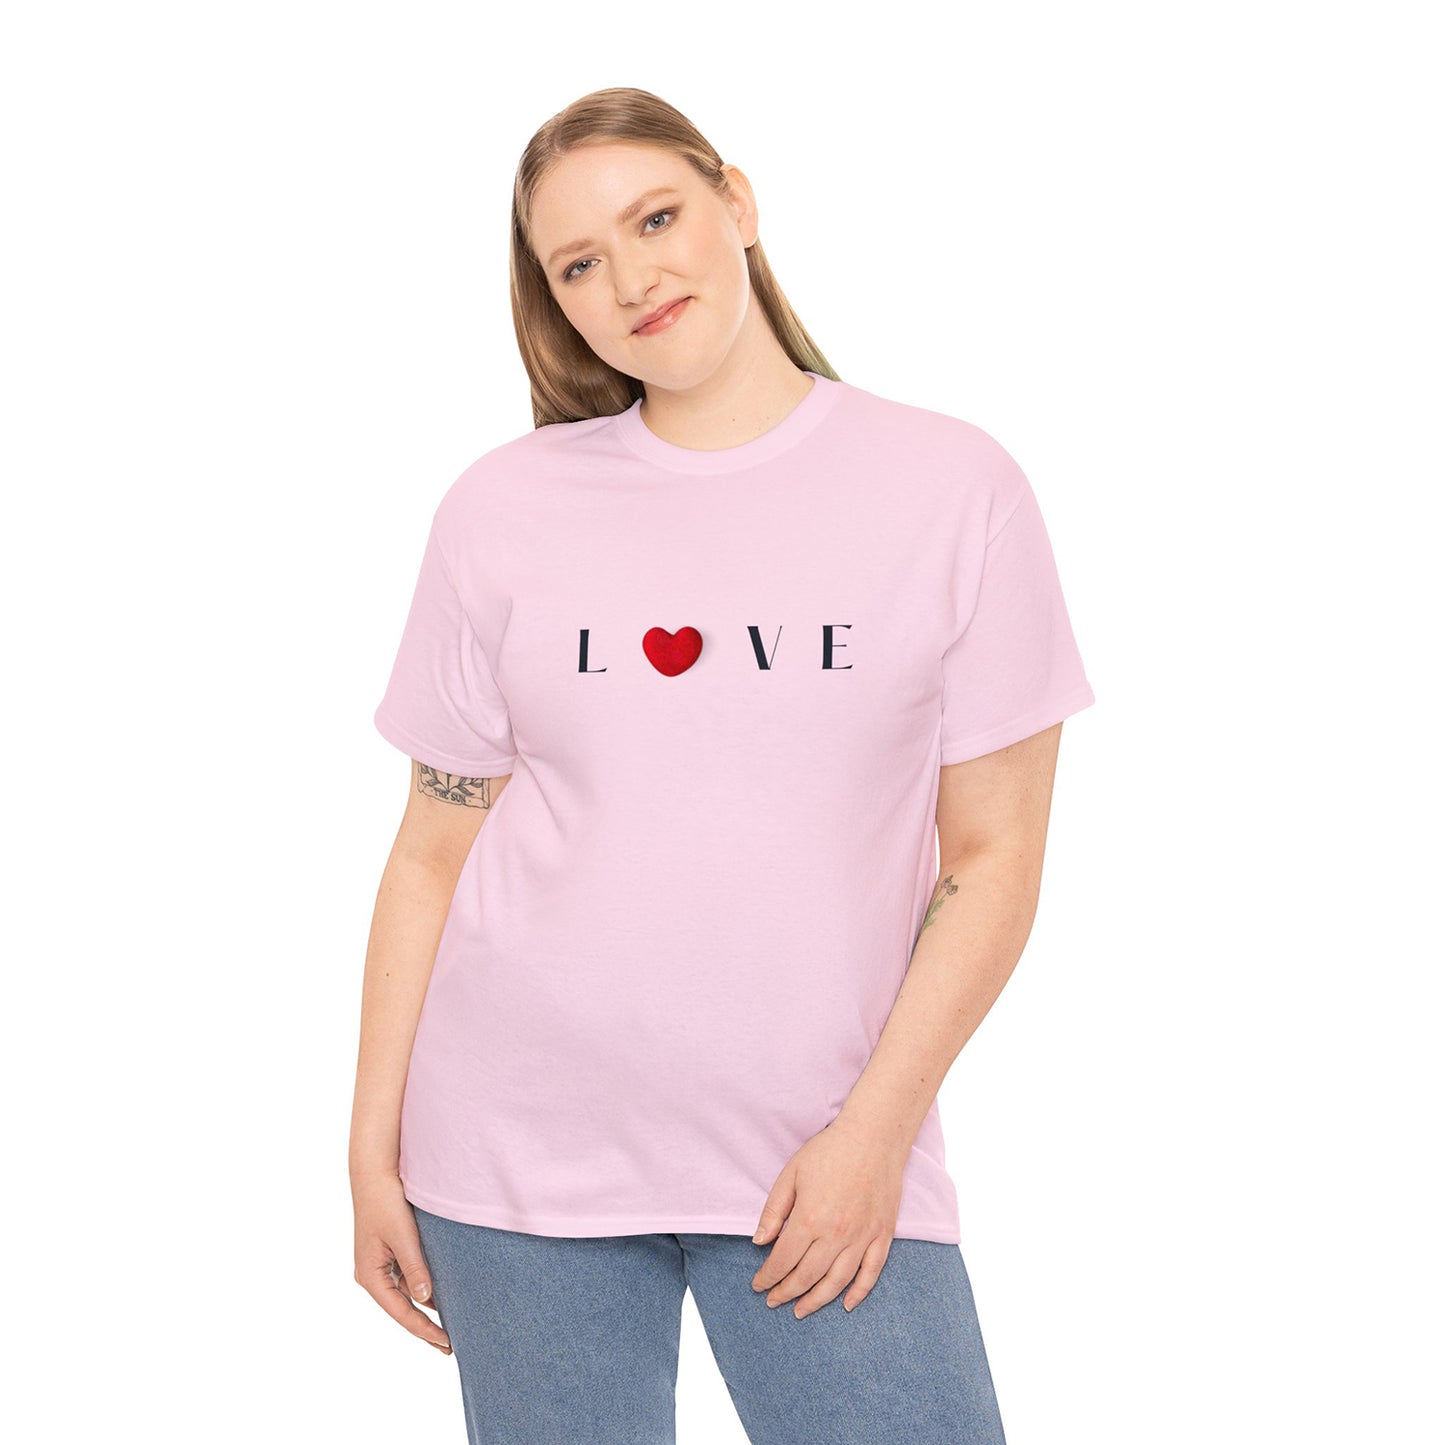 Love Heart printed T-shirt